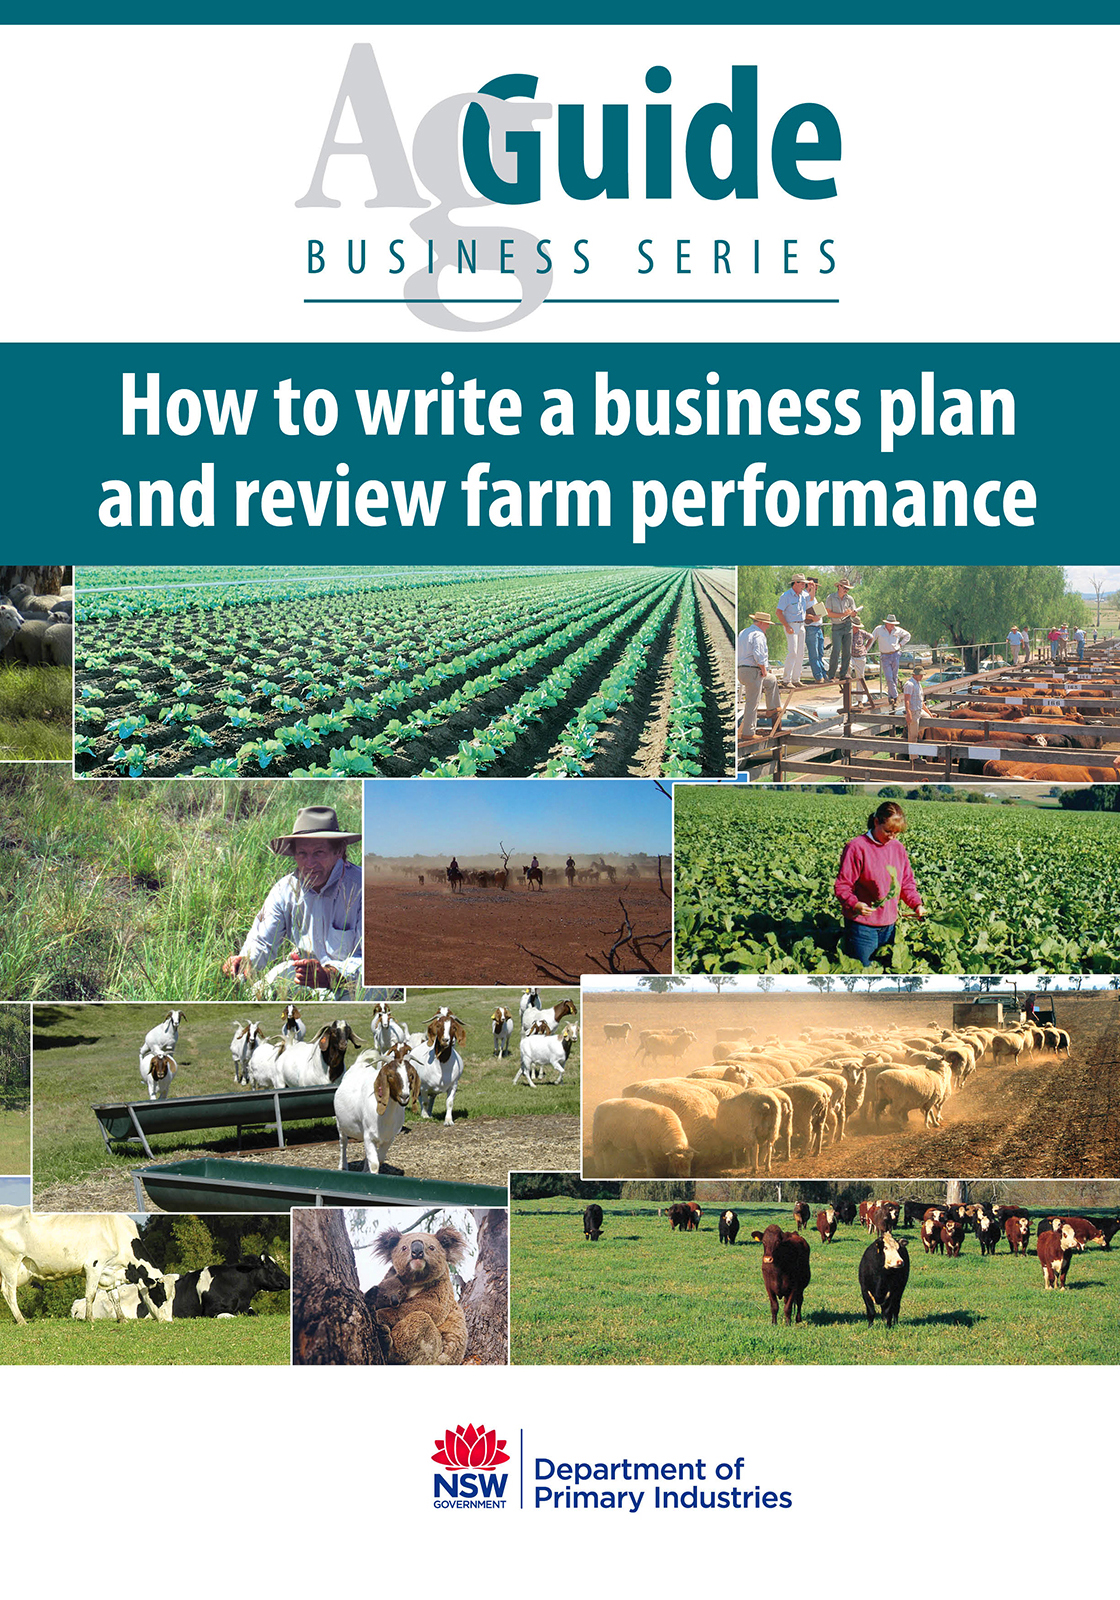 livestock farming business plan south africa